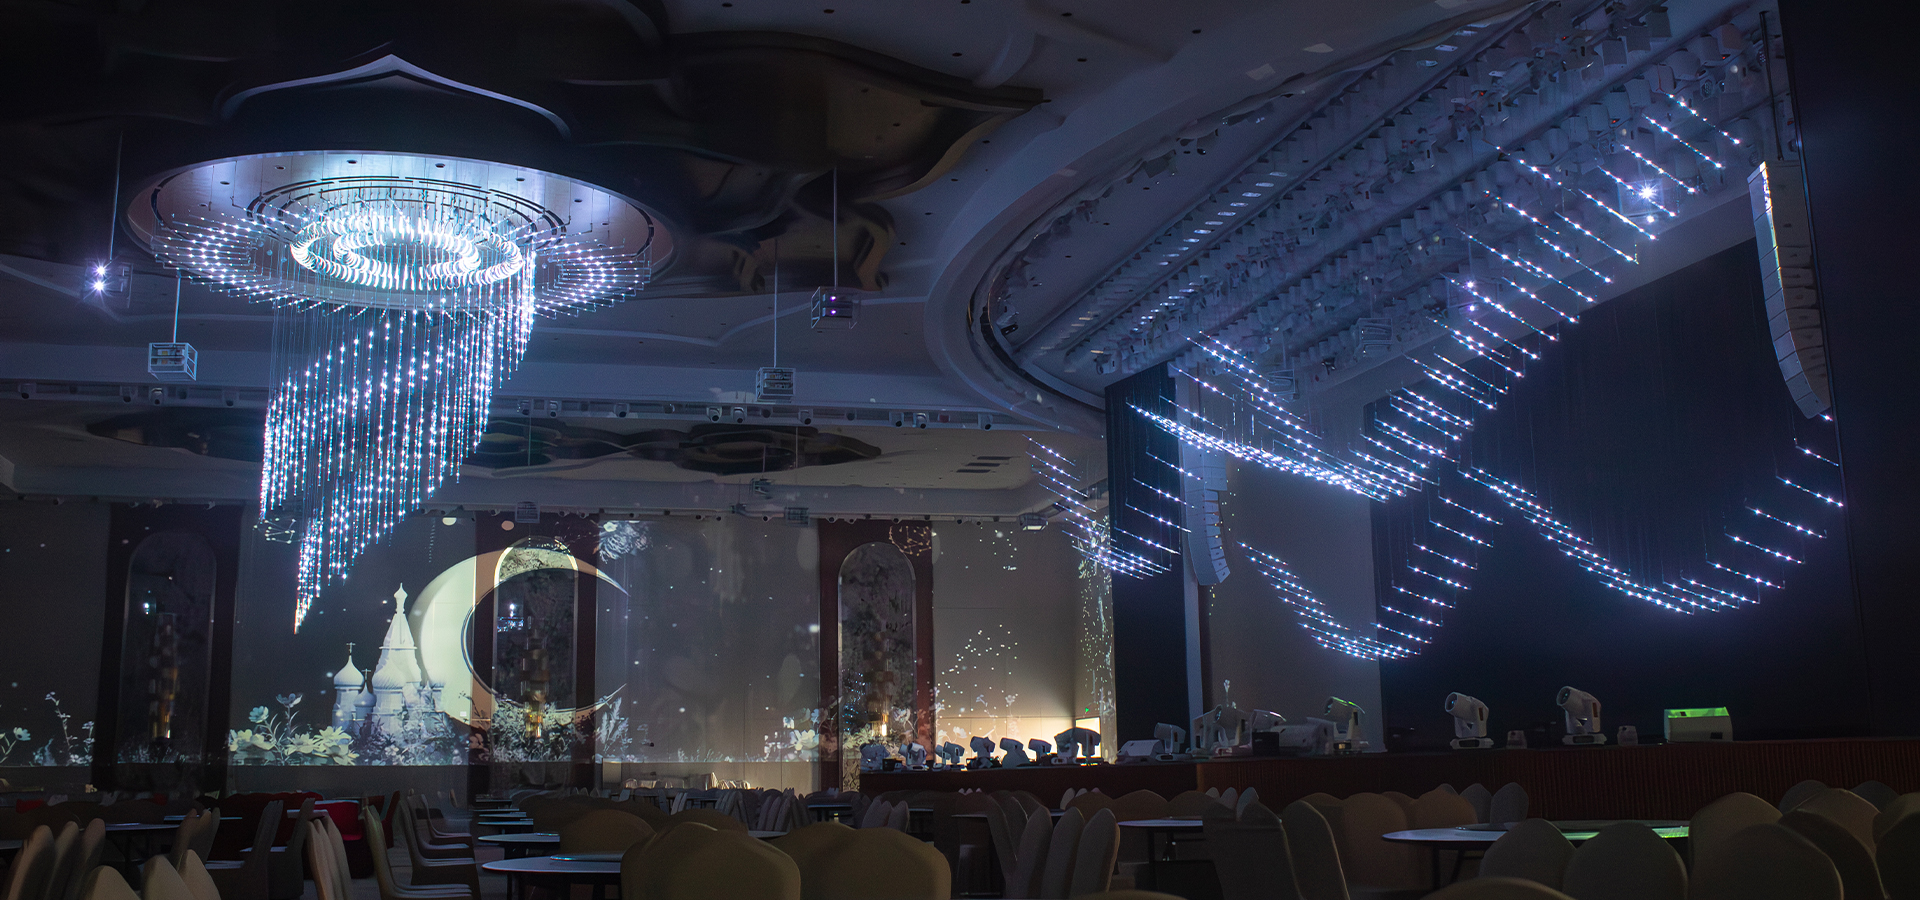 Create a dreamy scene in the banquet hall